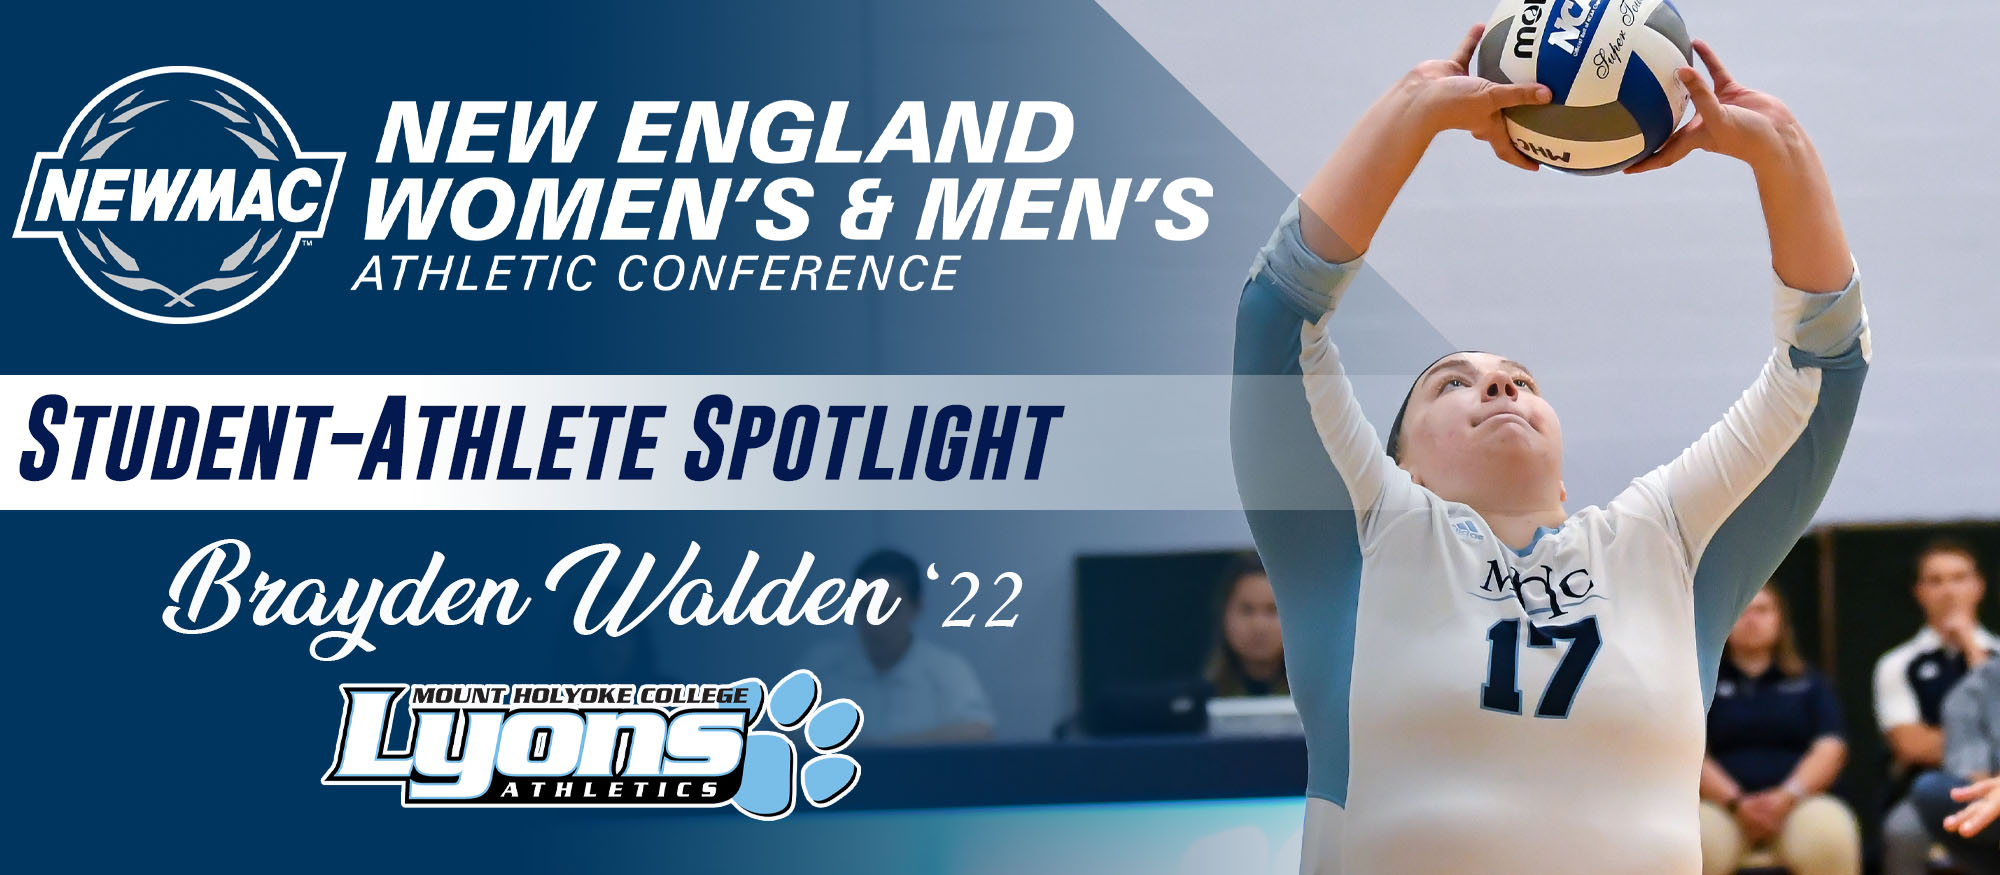 NEWMAC Student-Athlete Spotlight: Volleyball's Brayden Walden '21